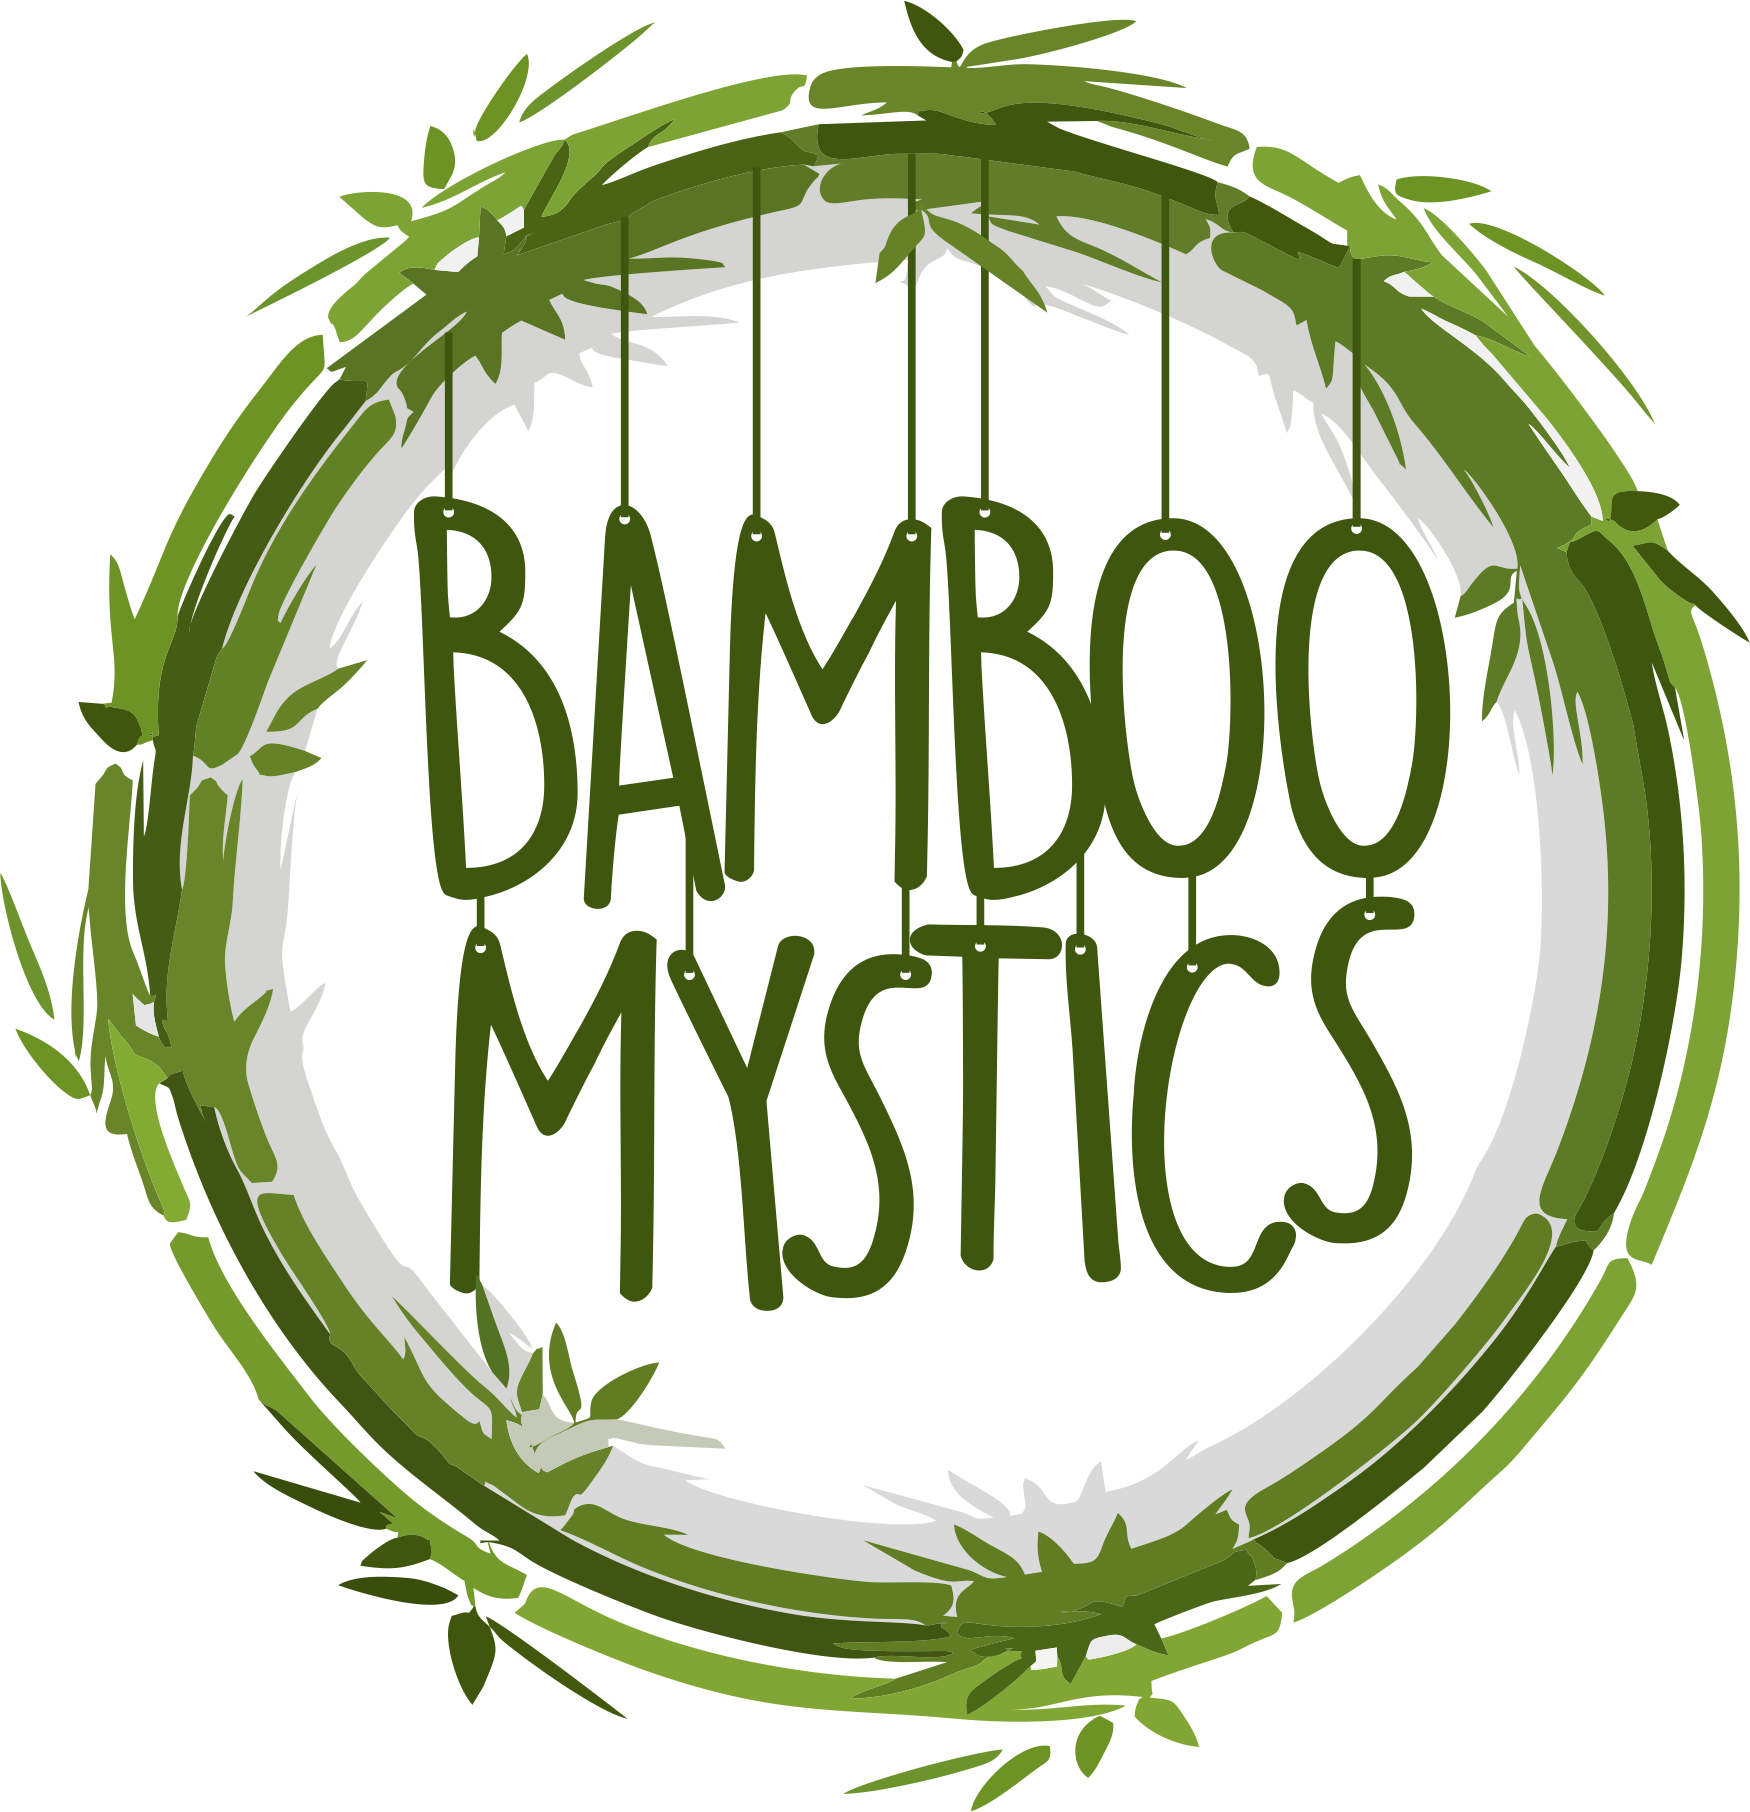 BAMBOO  MYSTICS